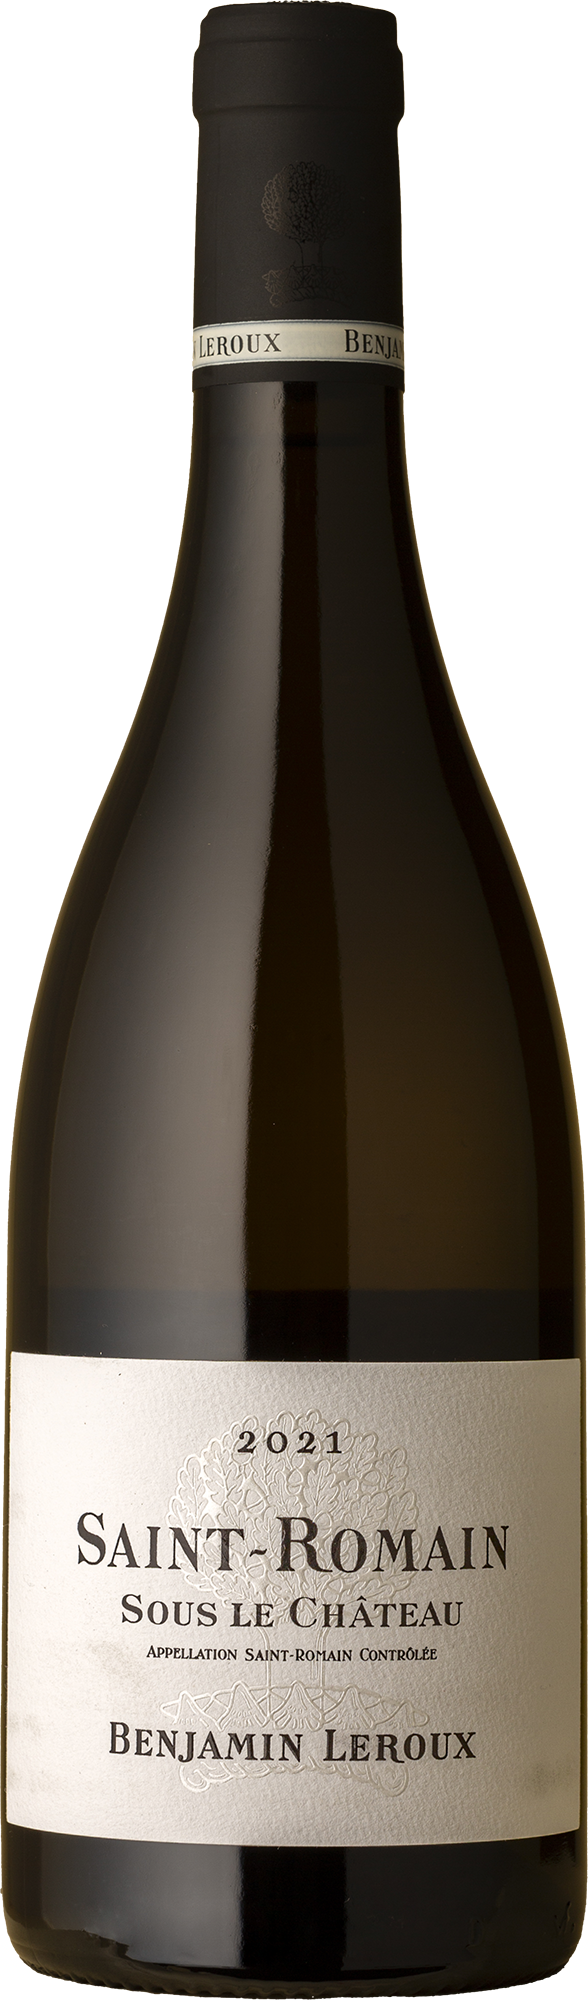 Benjamin Leroux - Saint-Romain Sous le Chateau Chardonnay 2021 White Wine